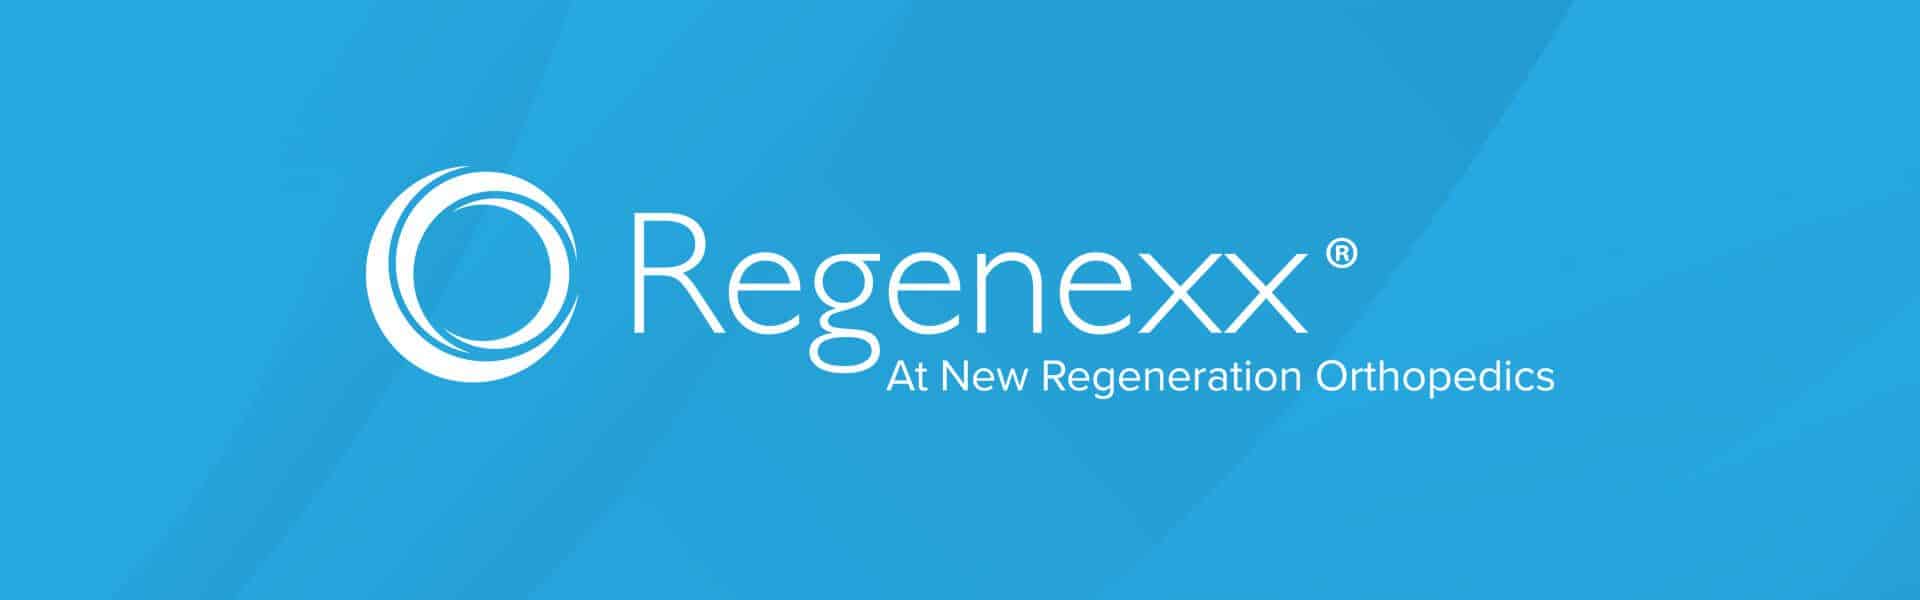 regenexx-at-new-regeneration-orthopedics-2